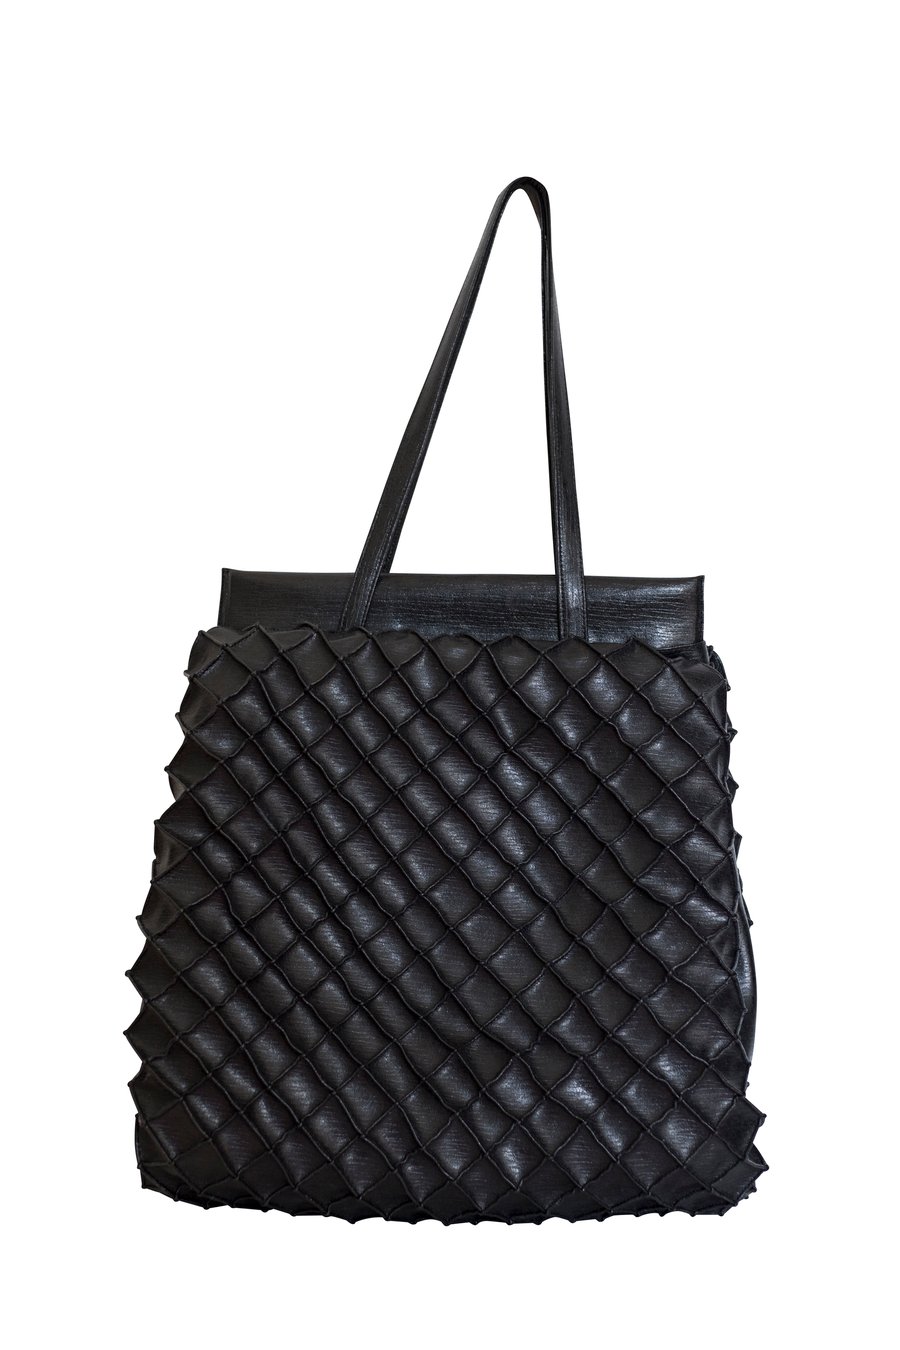 Image of Pineapple bag XXL - Black